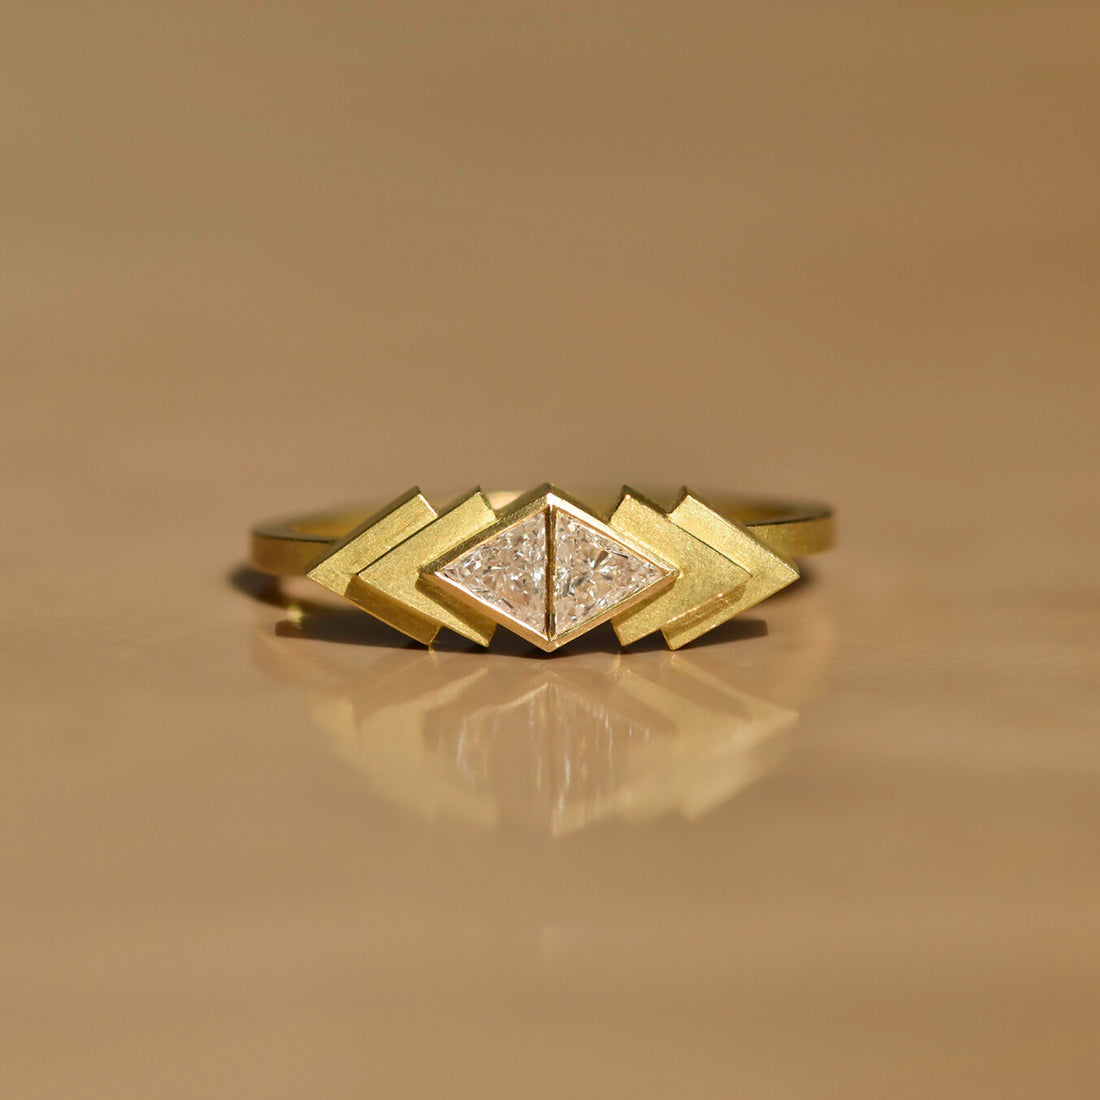  Trillion Cut Diamond Pichola Ring by Shivani Chorwadia | The Cut London